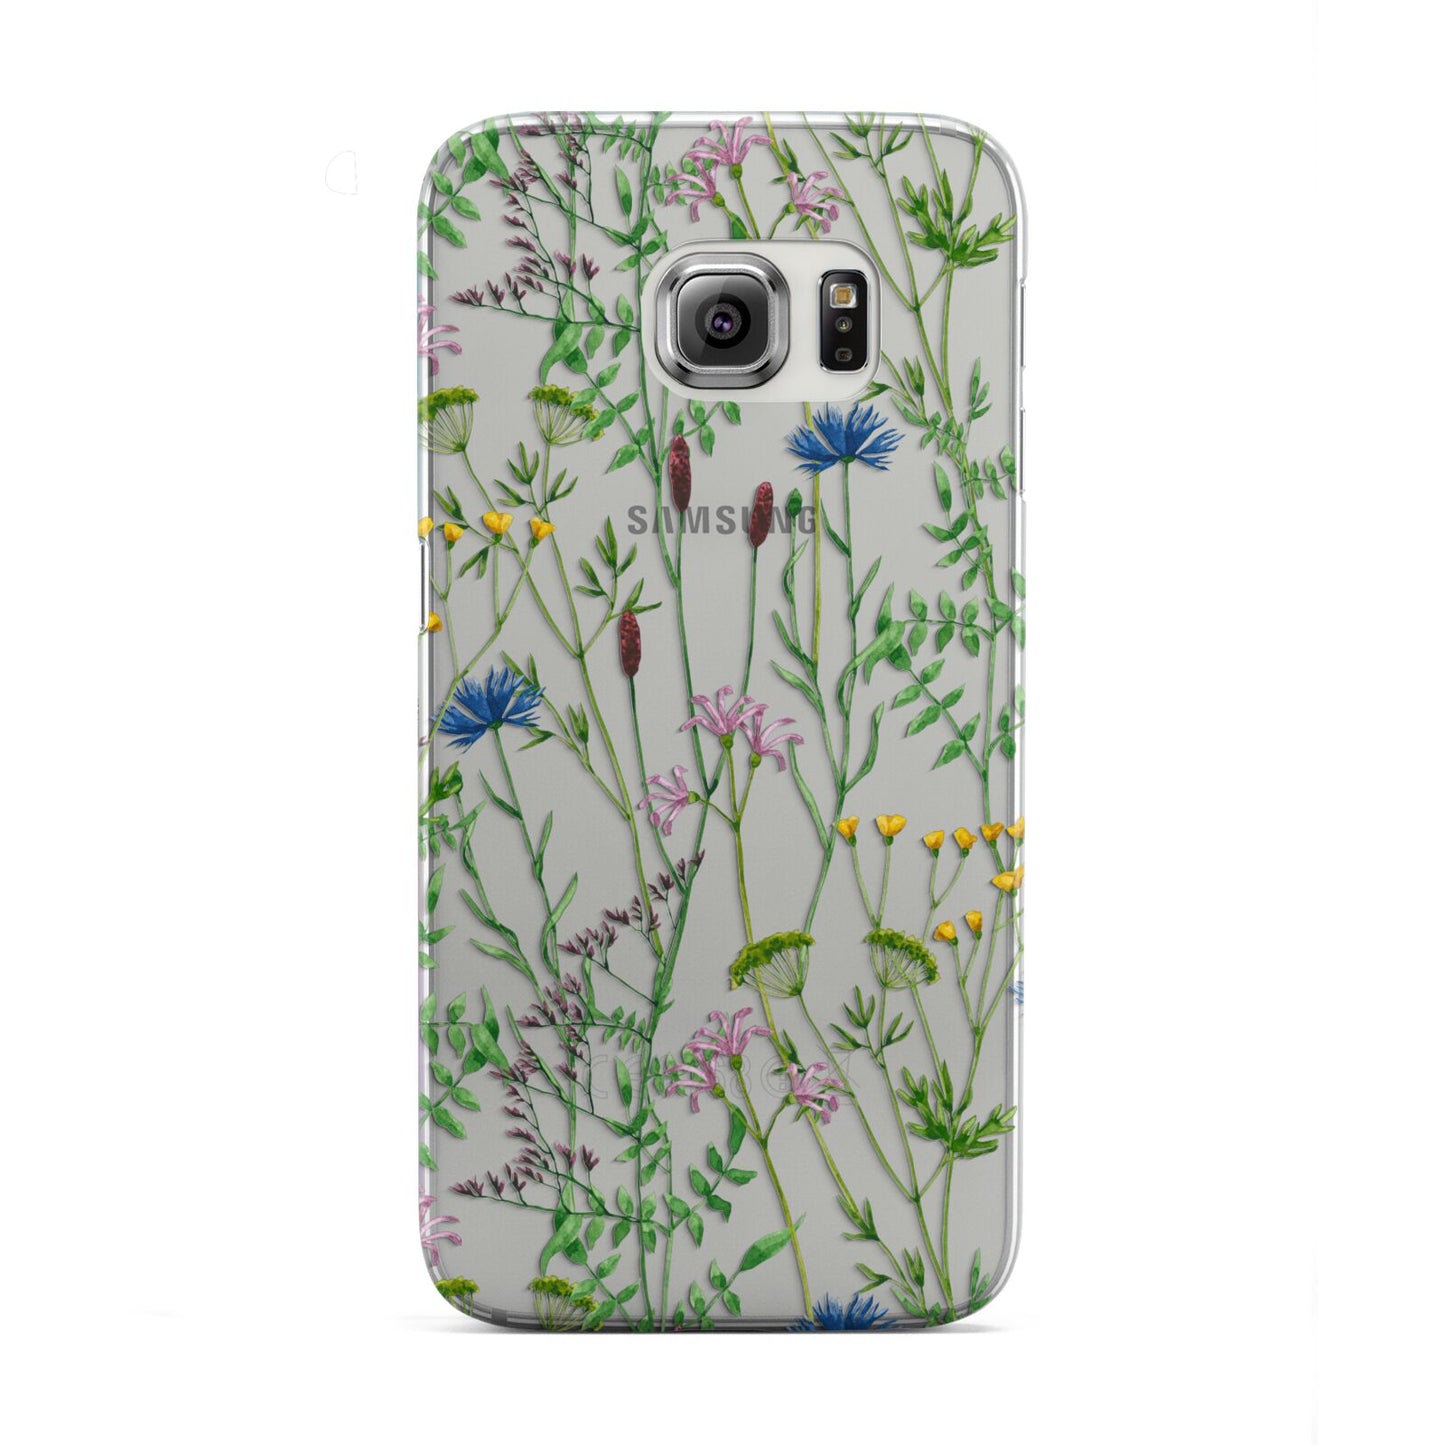 Wildflowers Samsung Galaxy S6 Edge Case